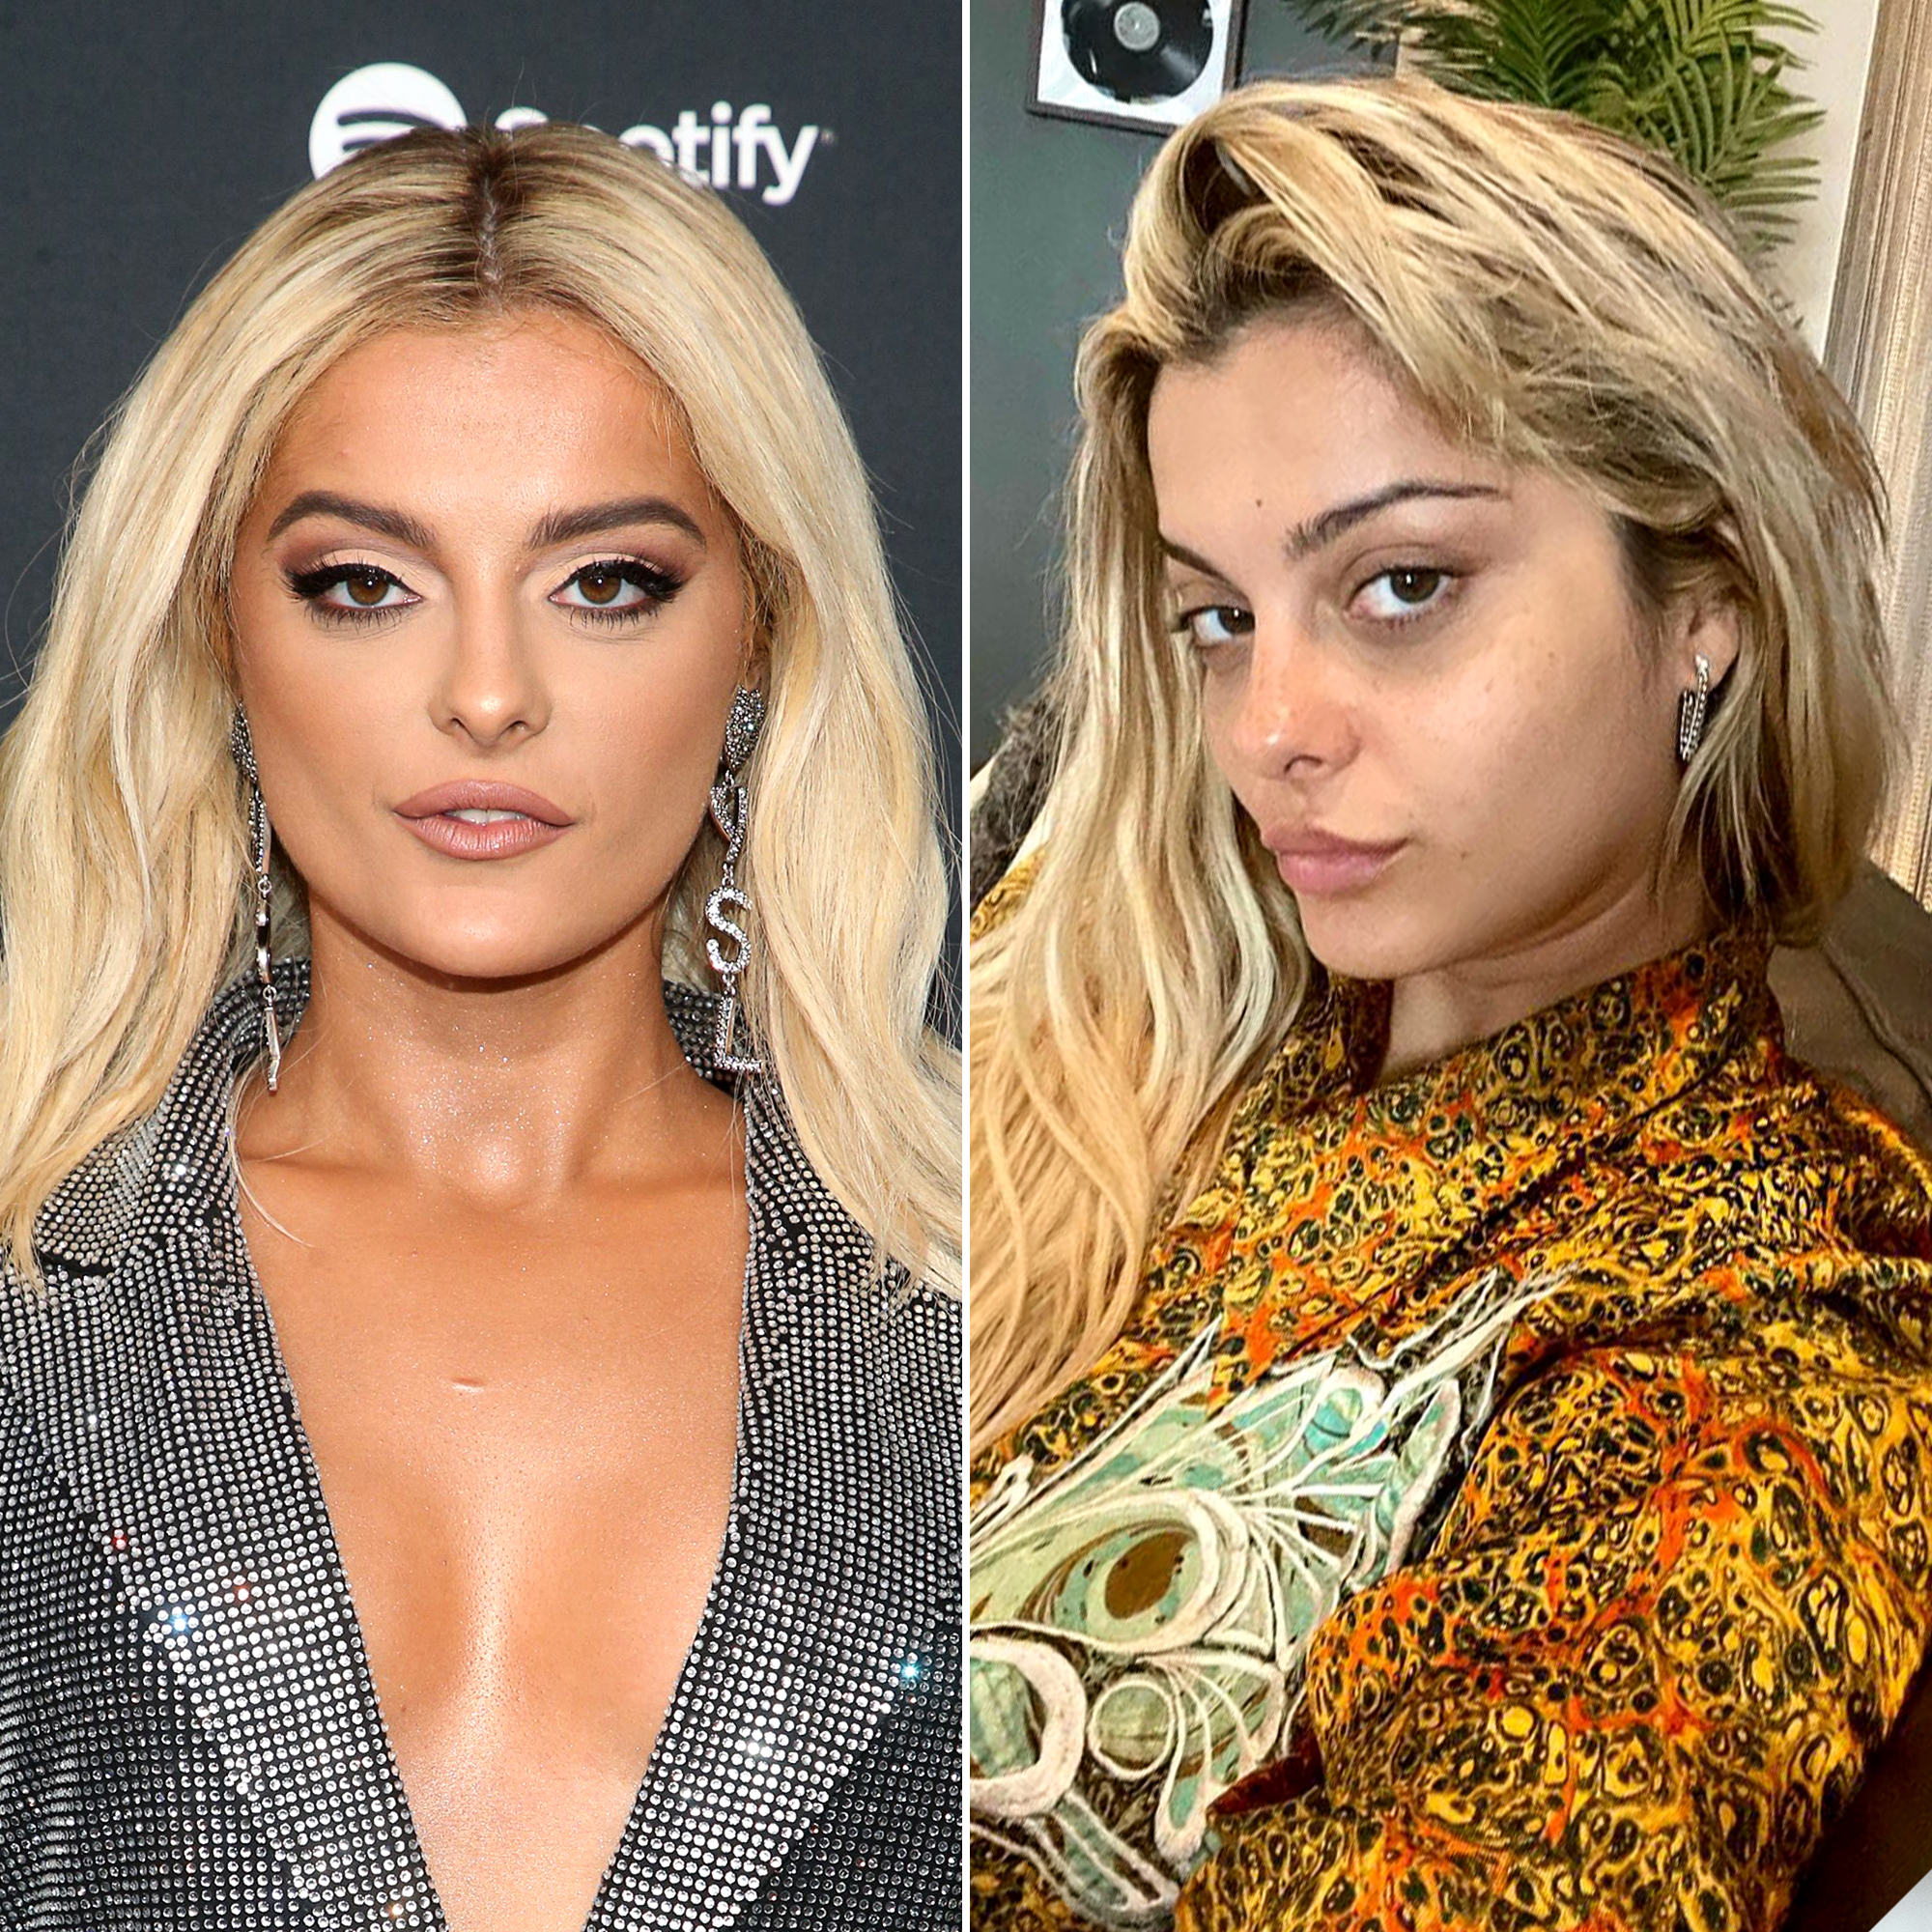 Most Beautiful Celebrity Makeup-Free Photos of 2021